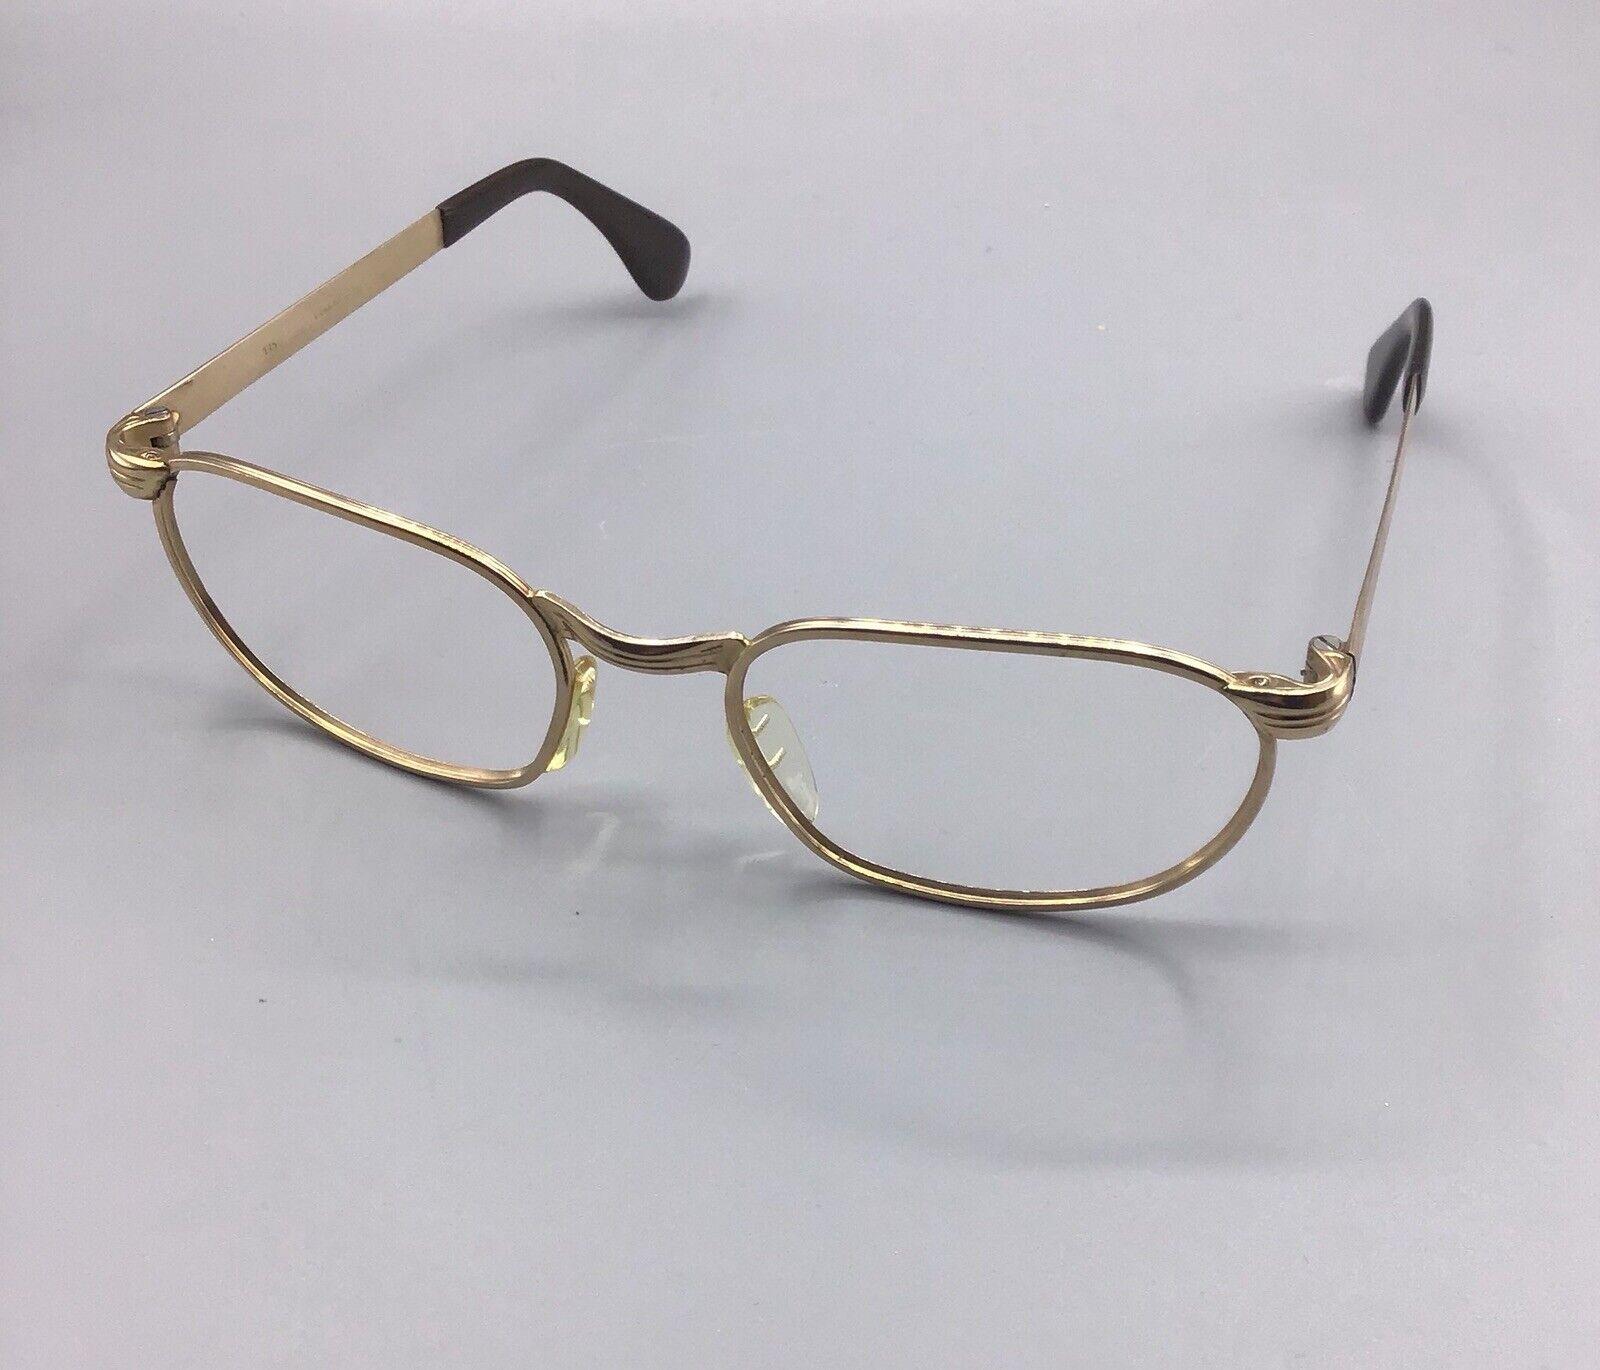 Marwitz occhiale vintage eyewear frame canador gold laminated oro